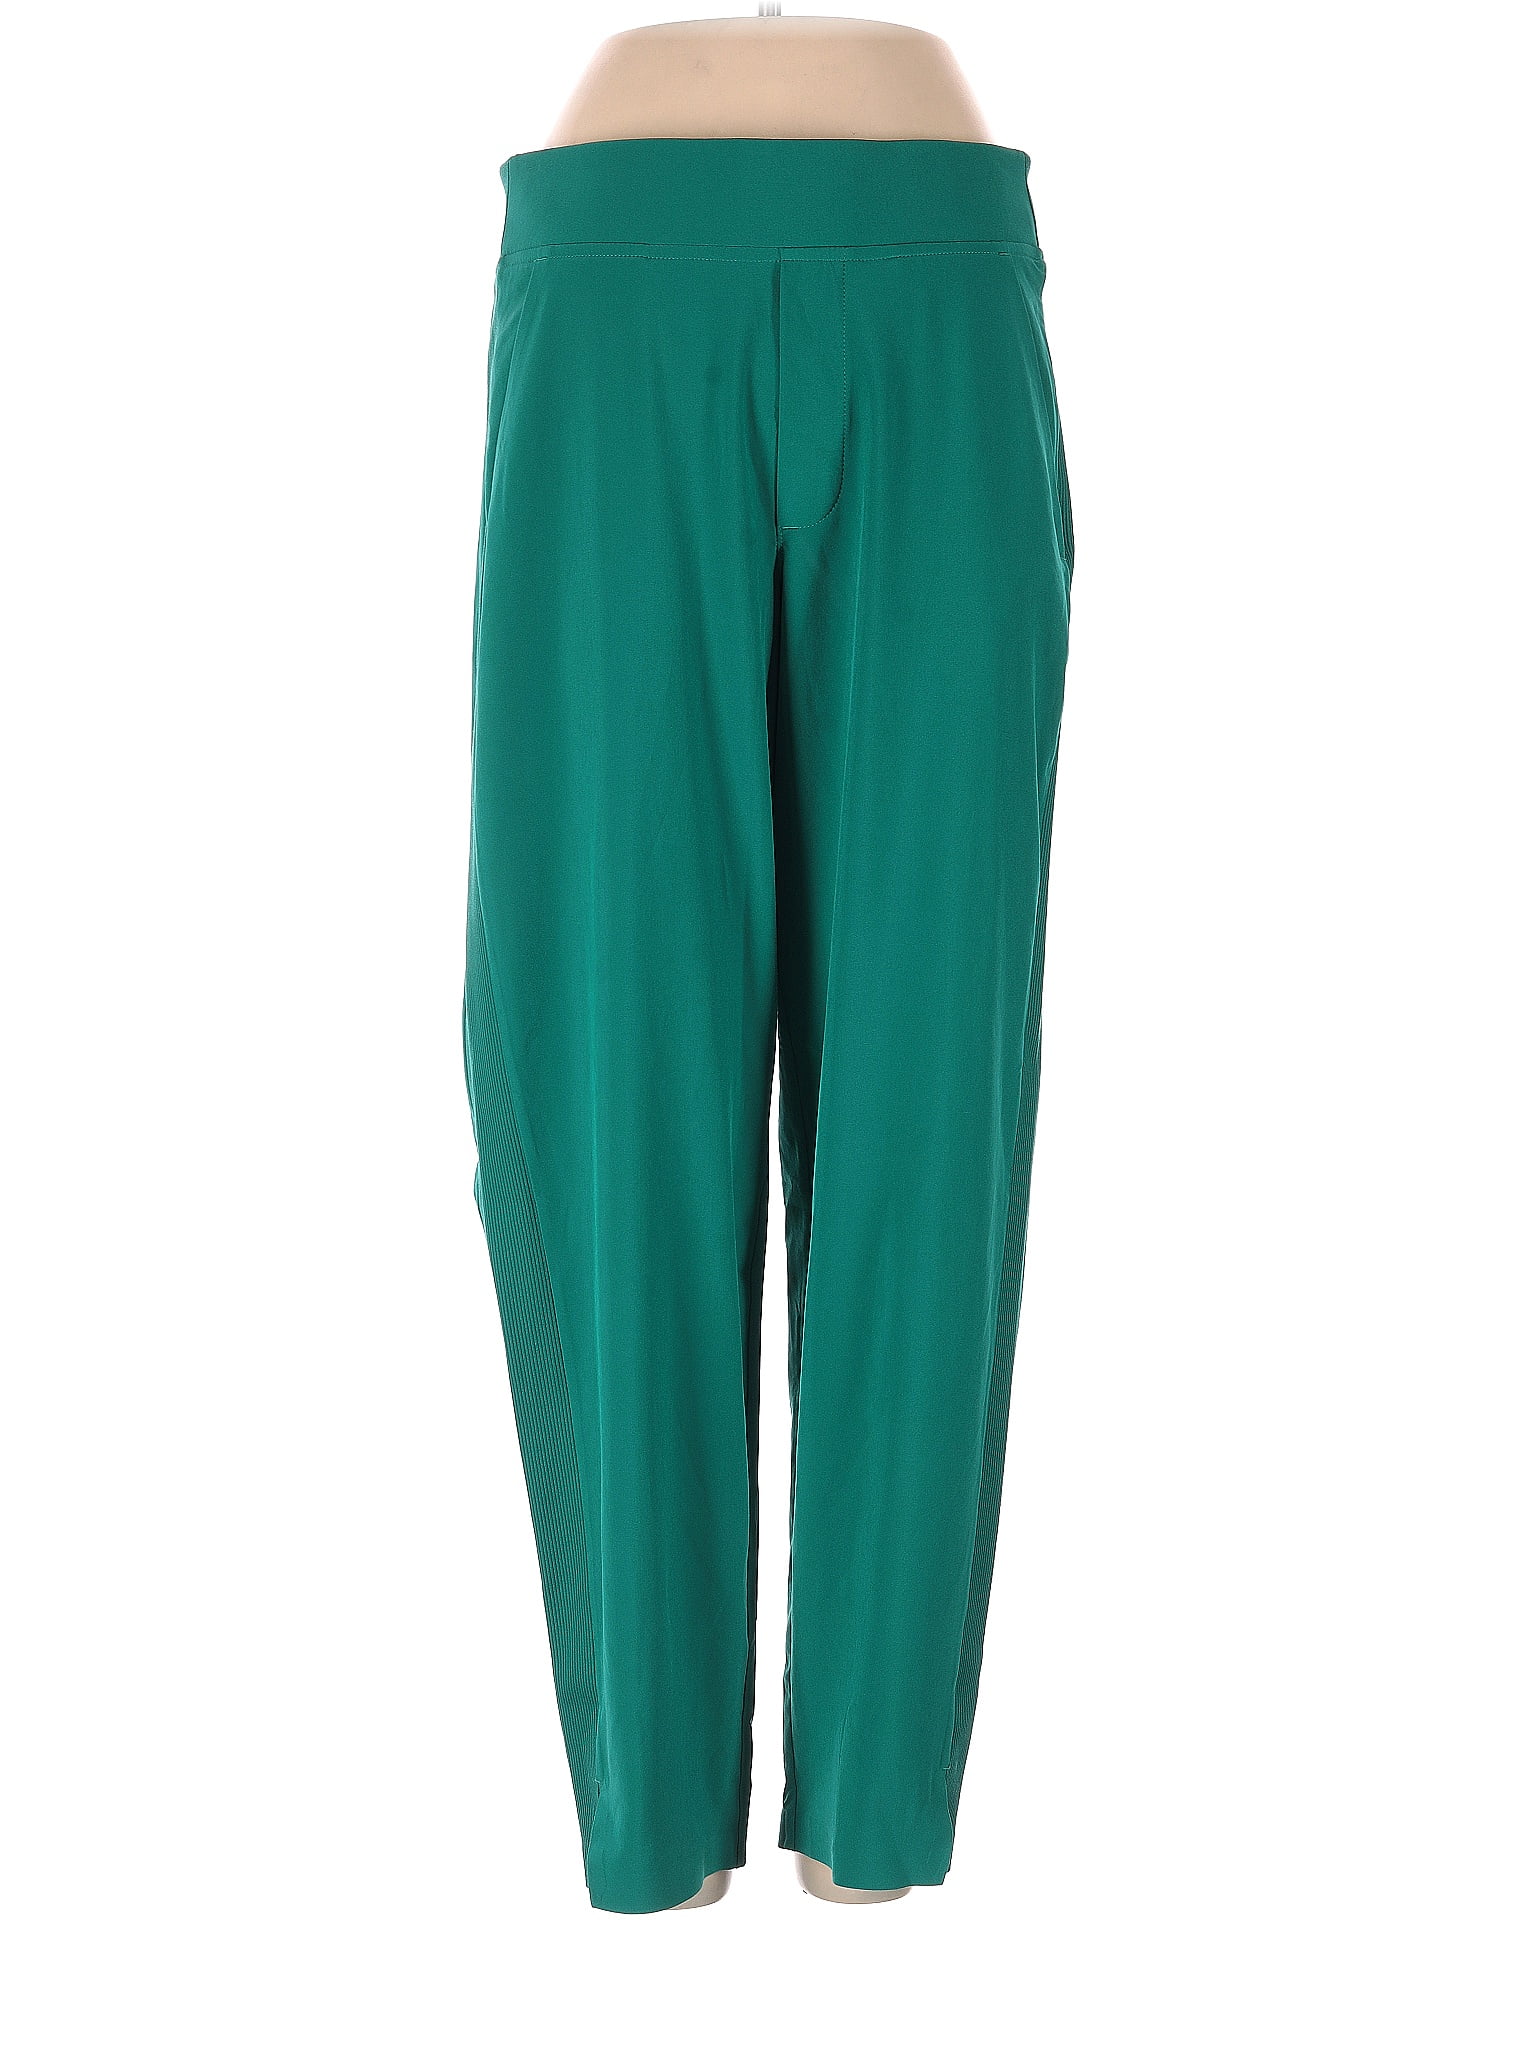 Athleta Solid Green Yoga Pants Size XS - 56% off